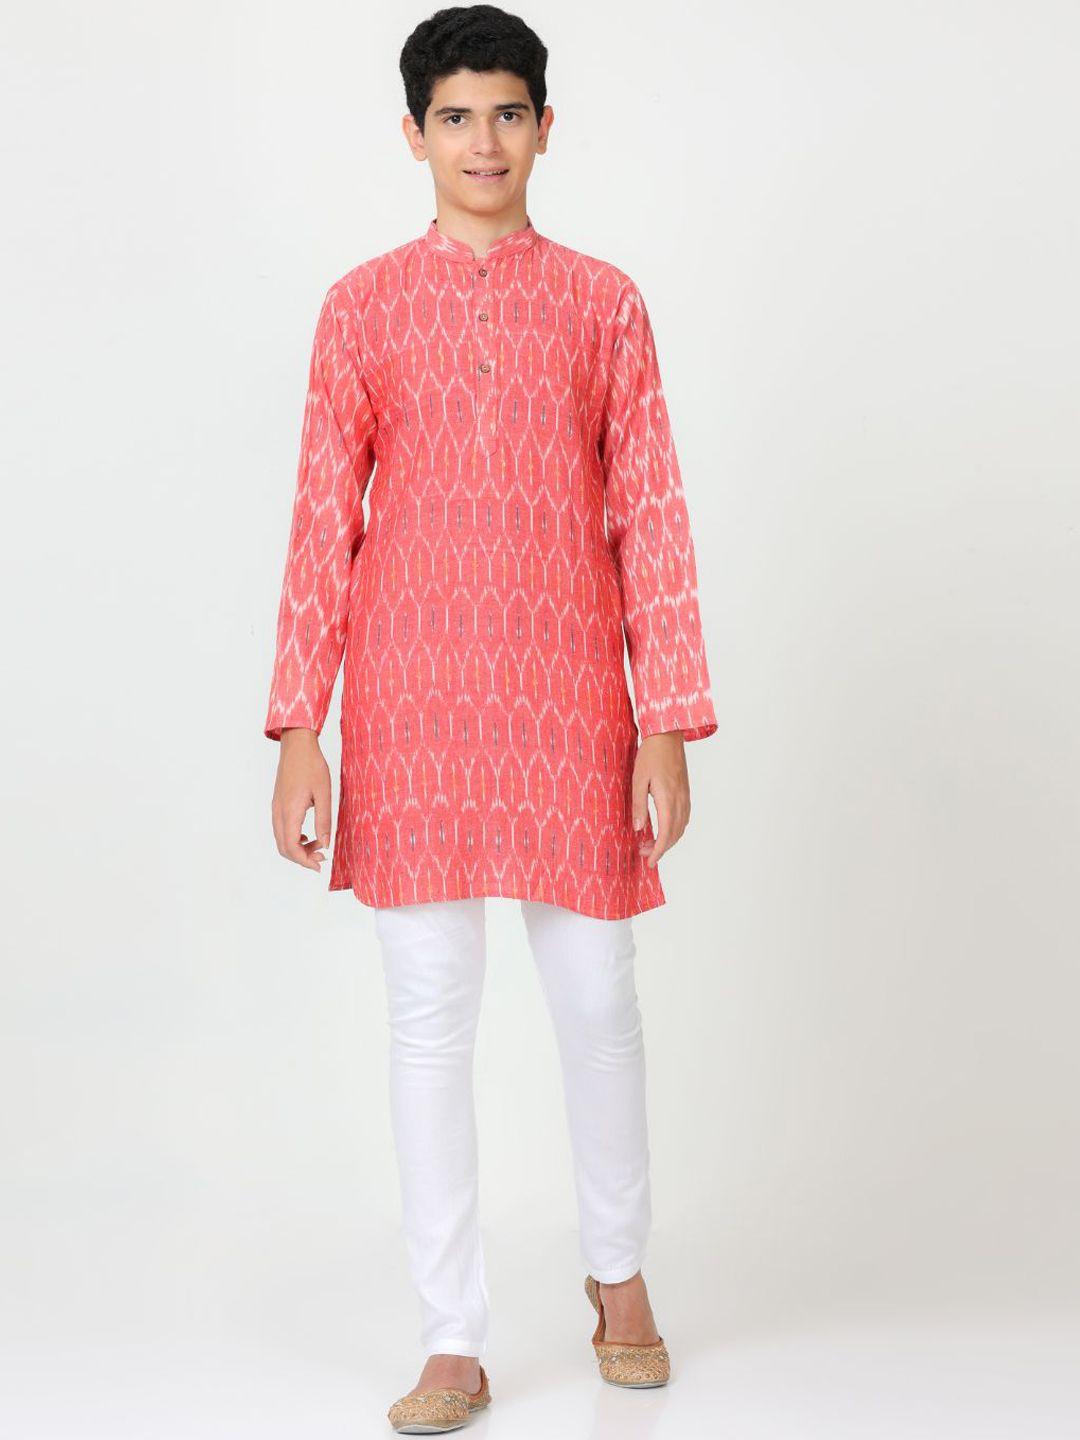 flavido-boys-red-ethnic-motifs-printed-regular-pure-cotton-kurta-with-pyjamas